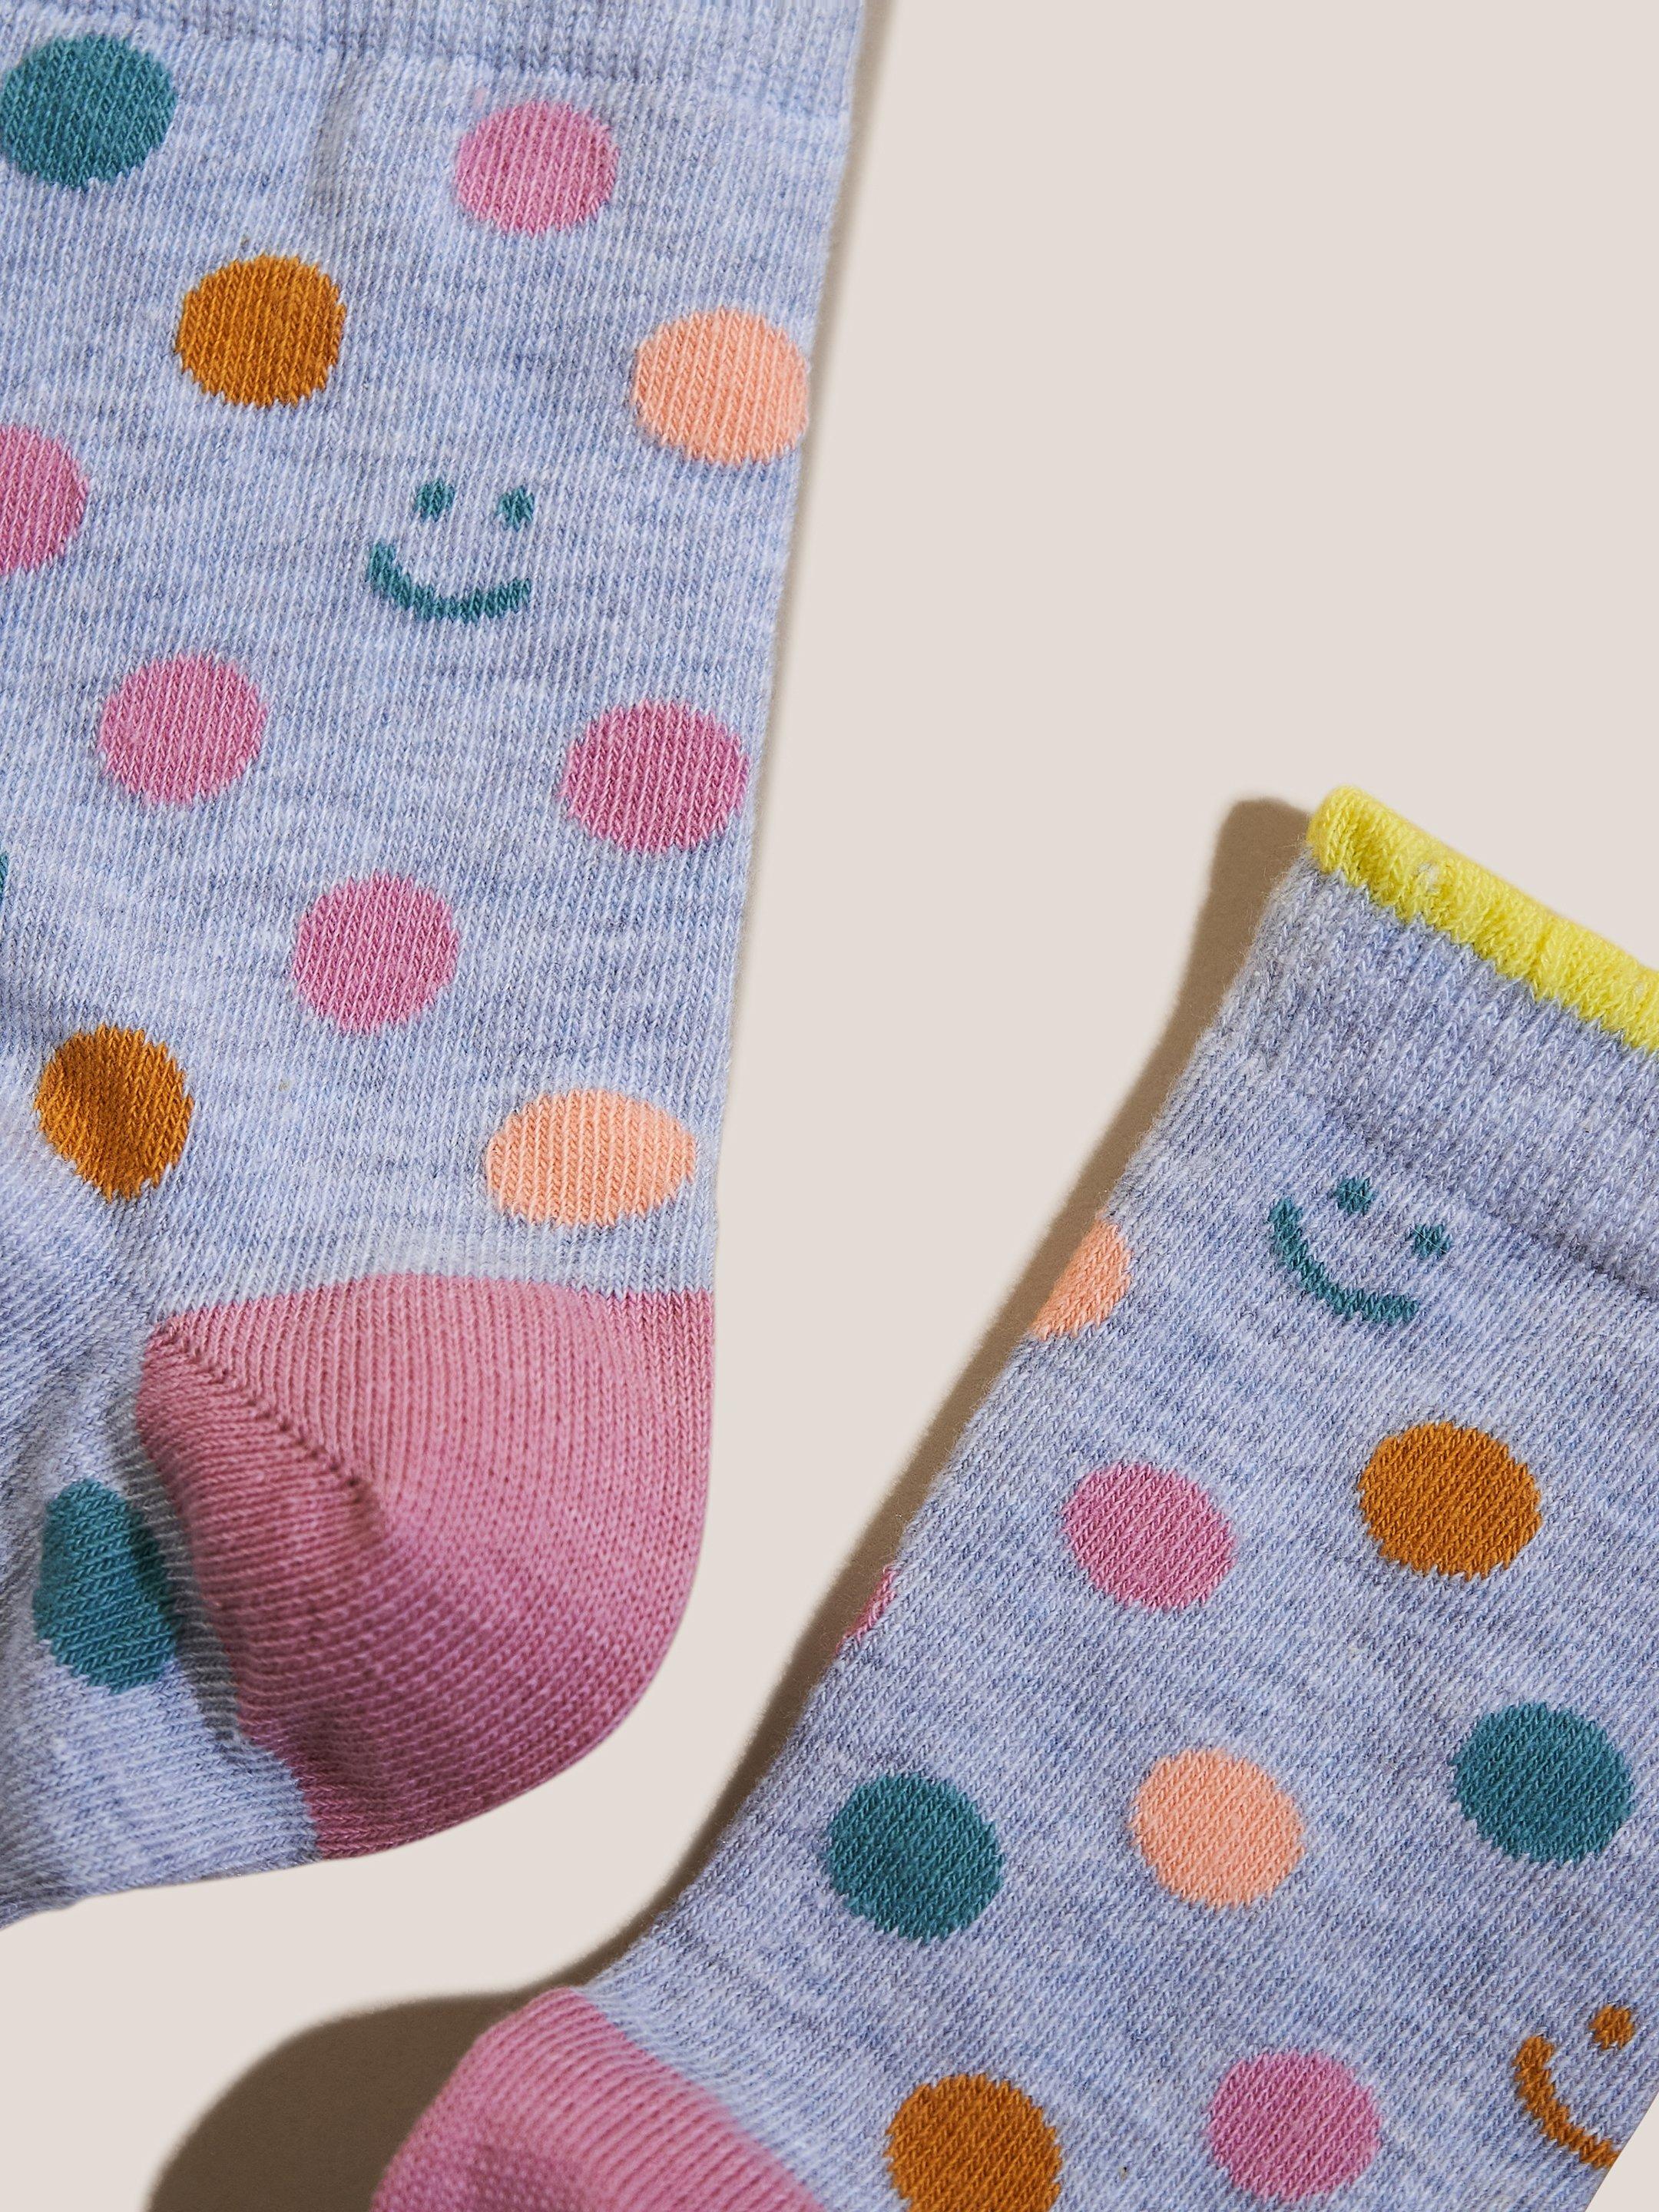 Spot Smiley Face Socks in BLUE MLT - FLAT FRONT